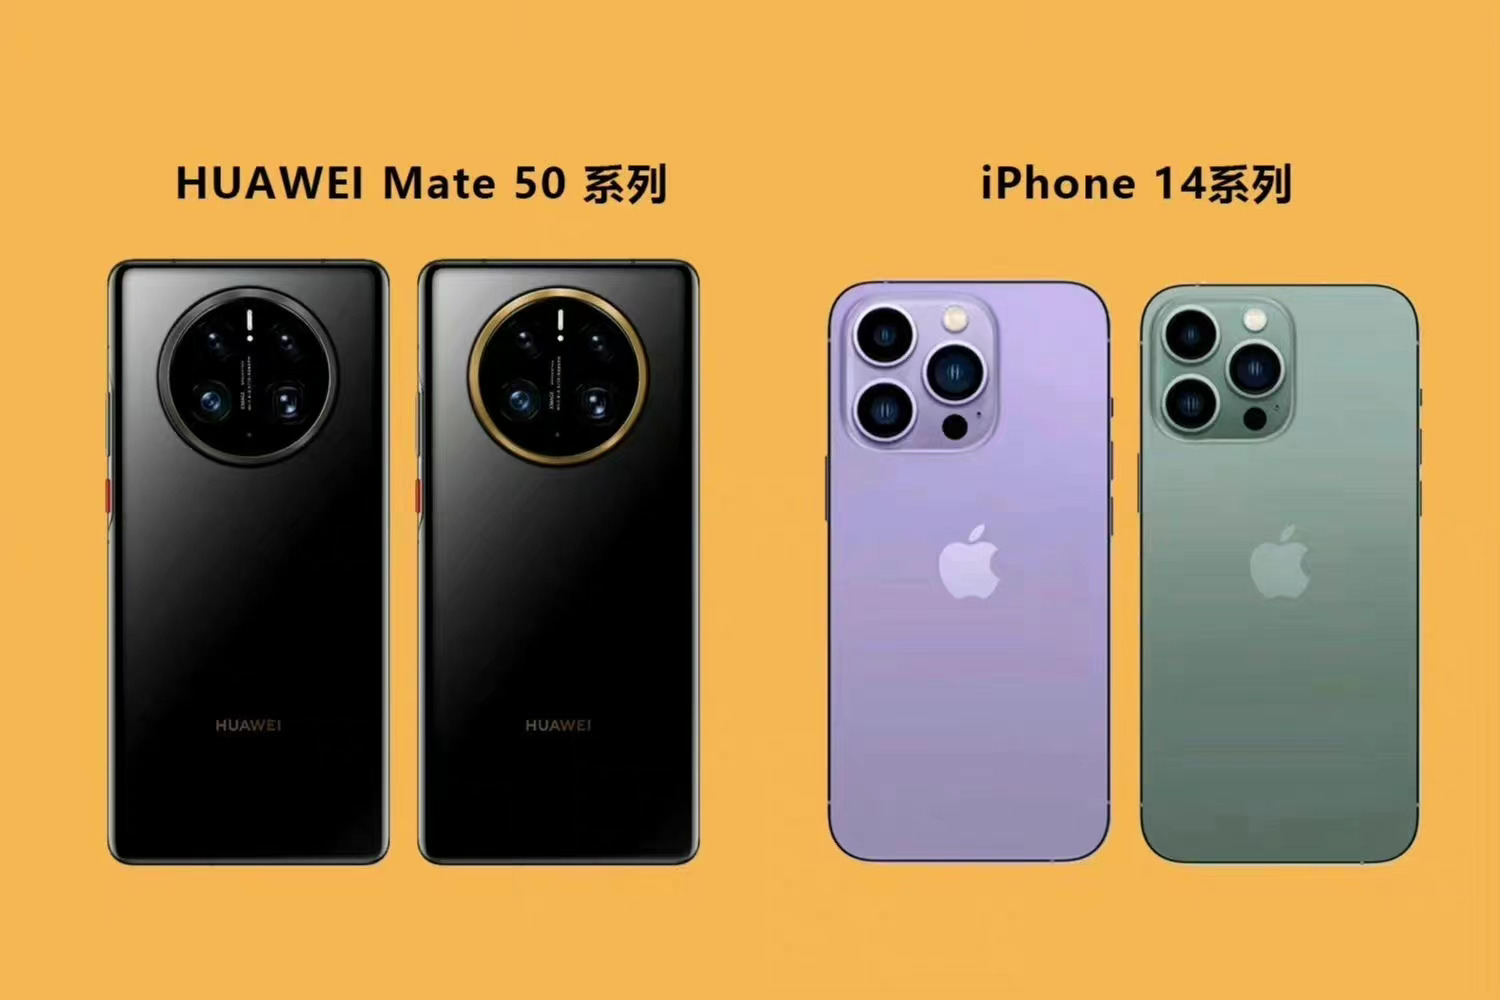 Huawei mate 50 pro vs